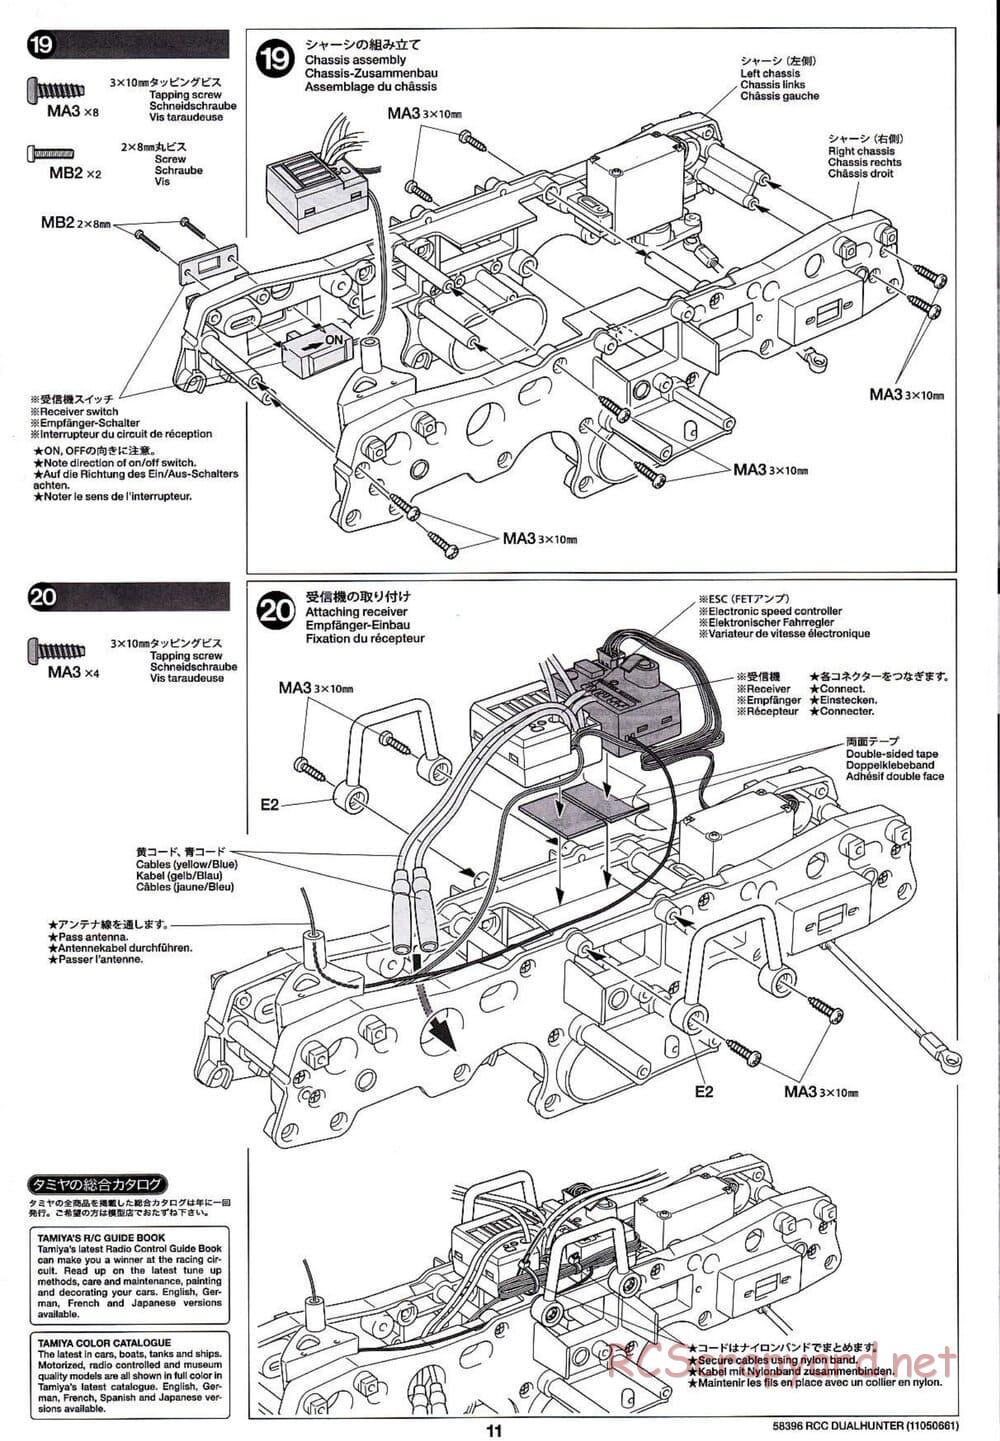 Tamiya - Dualhunter - WR-01 Chassis - Manual - Page 11